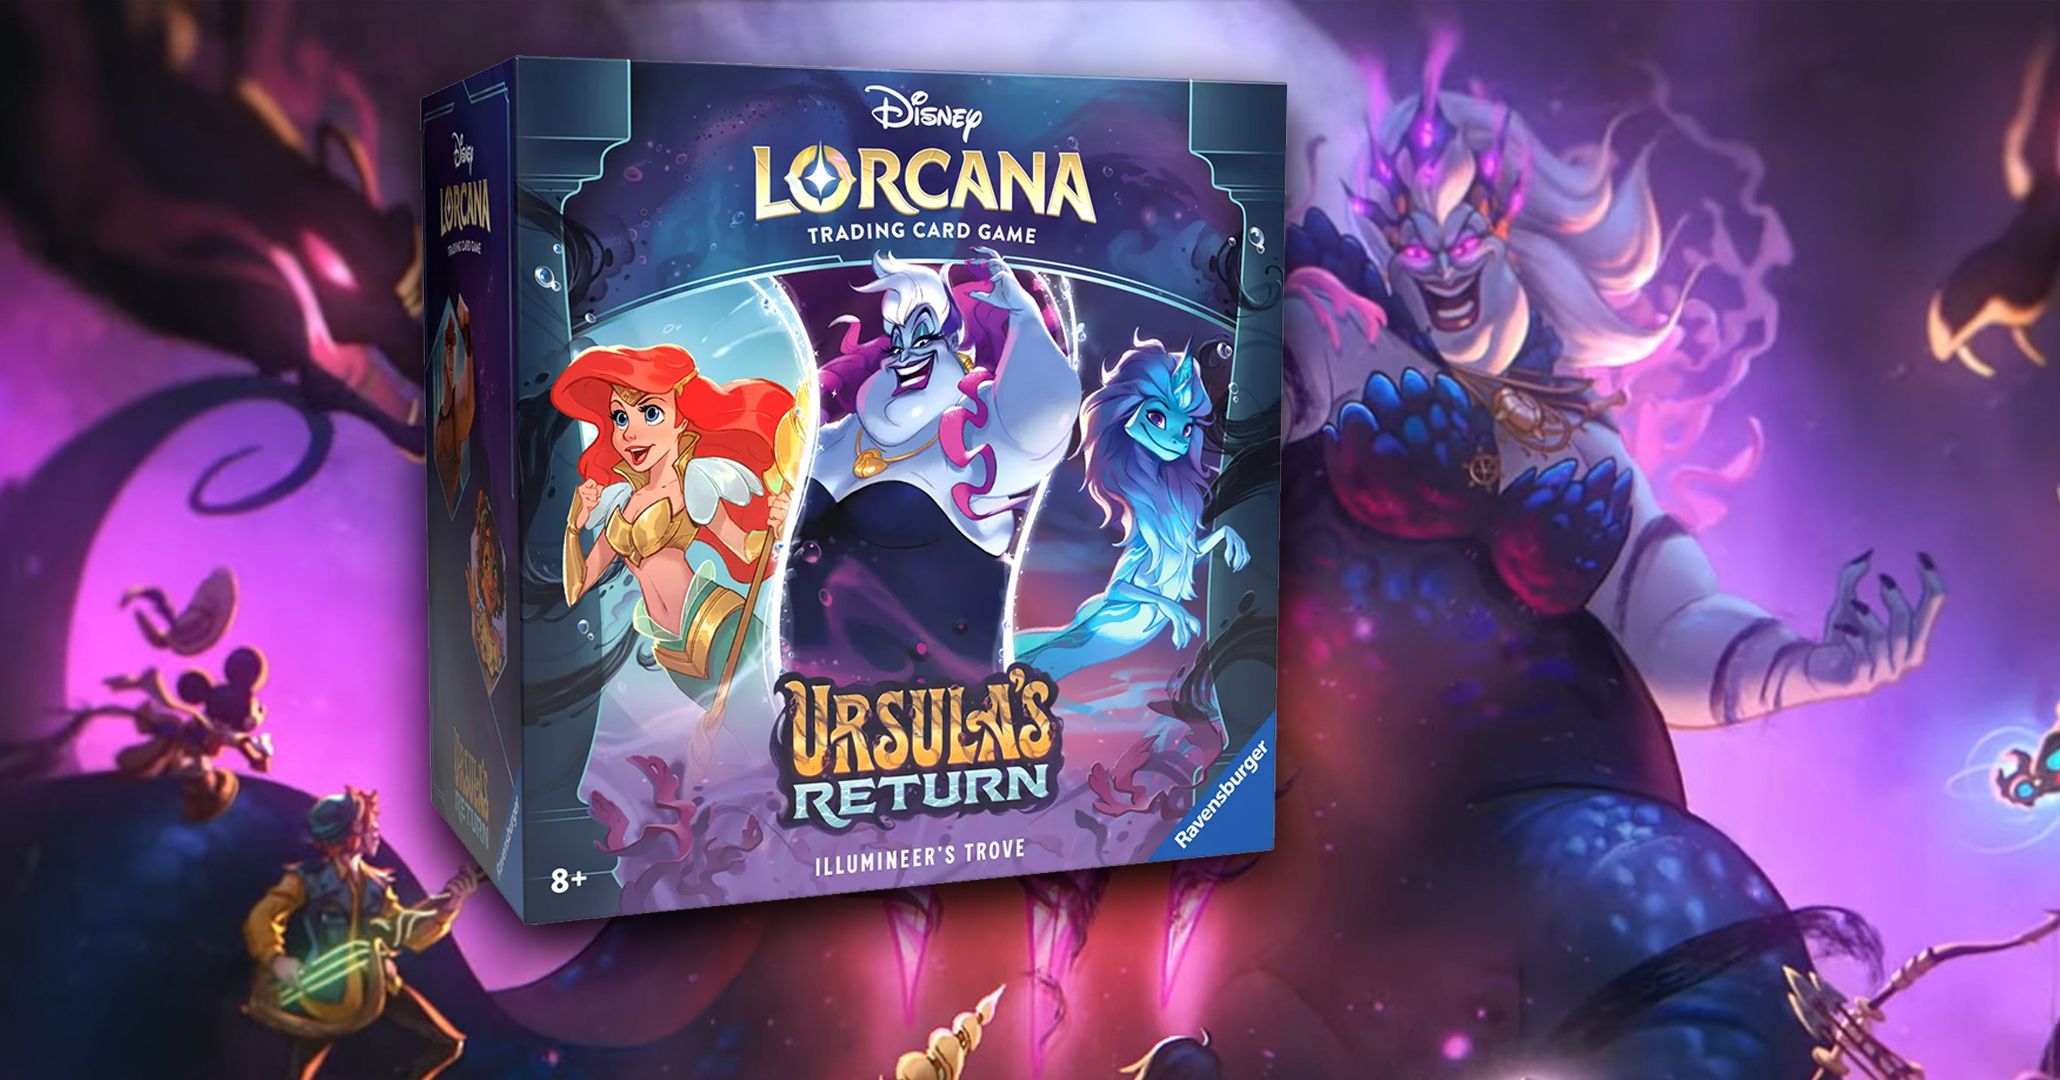 Disney Lorcana Ursula's Return art showing a hulking Ursula next to an image of the Illumineer's Trove box art.